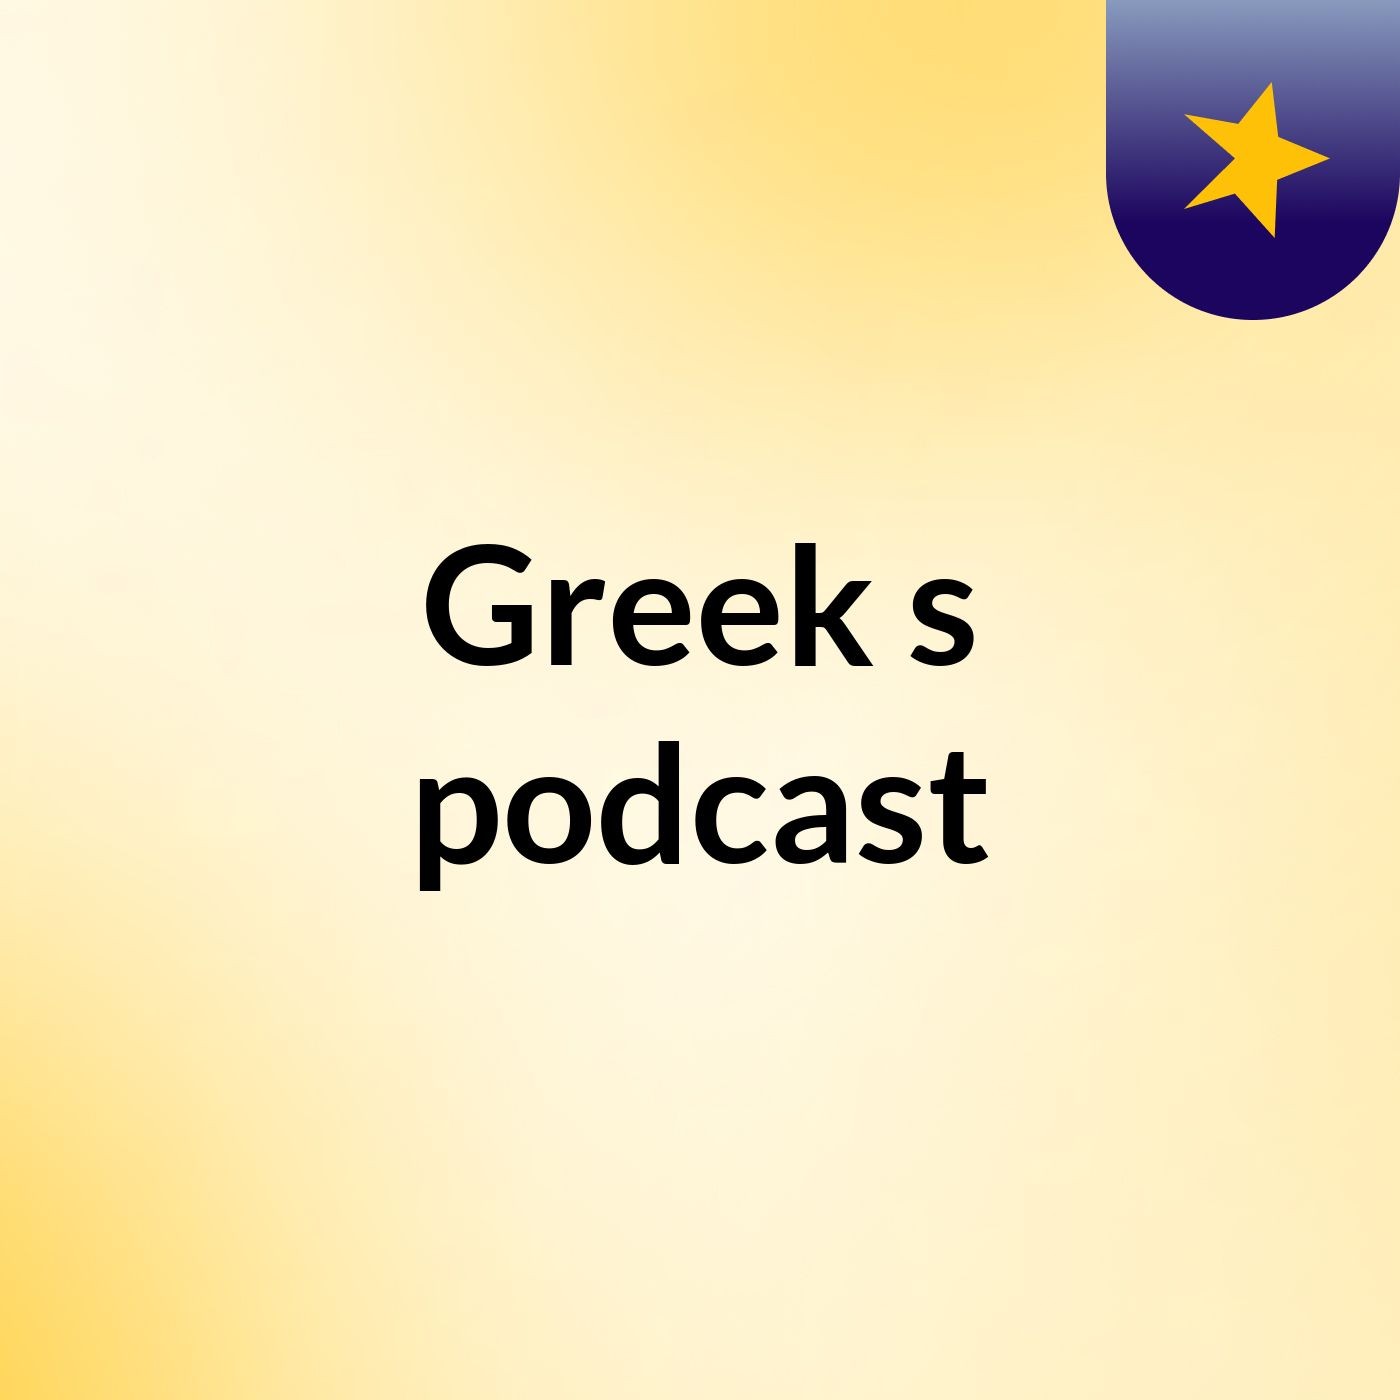 Episode 2 - Greek's podcast